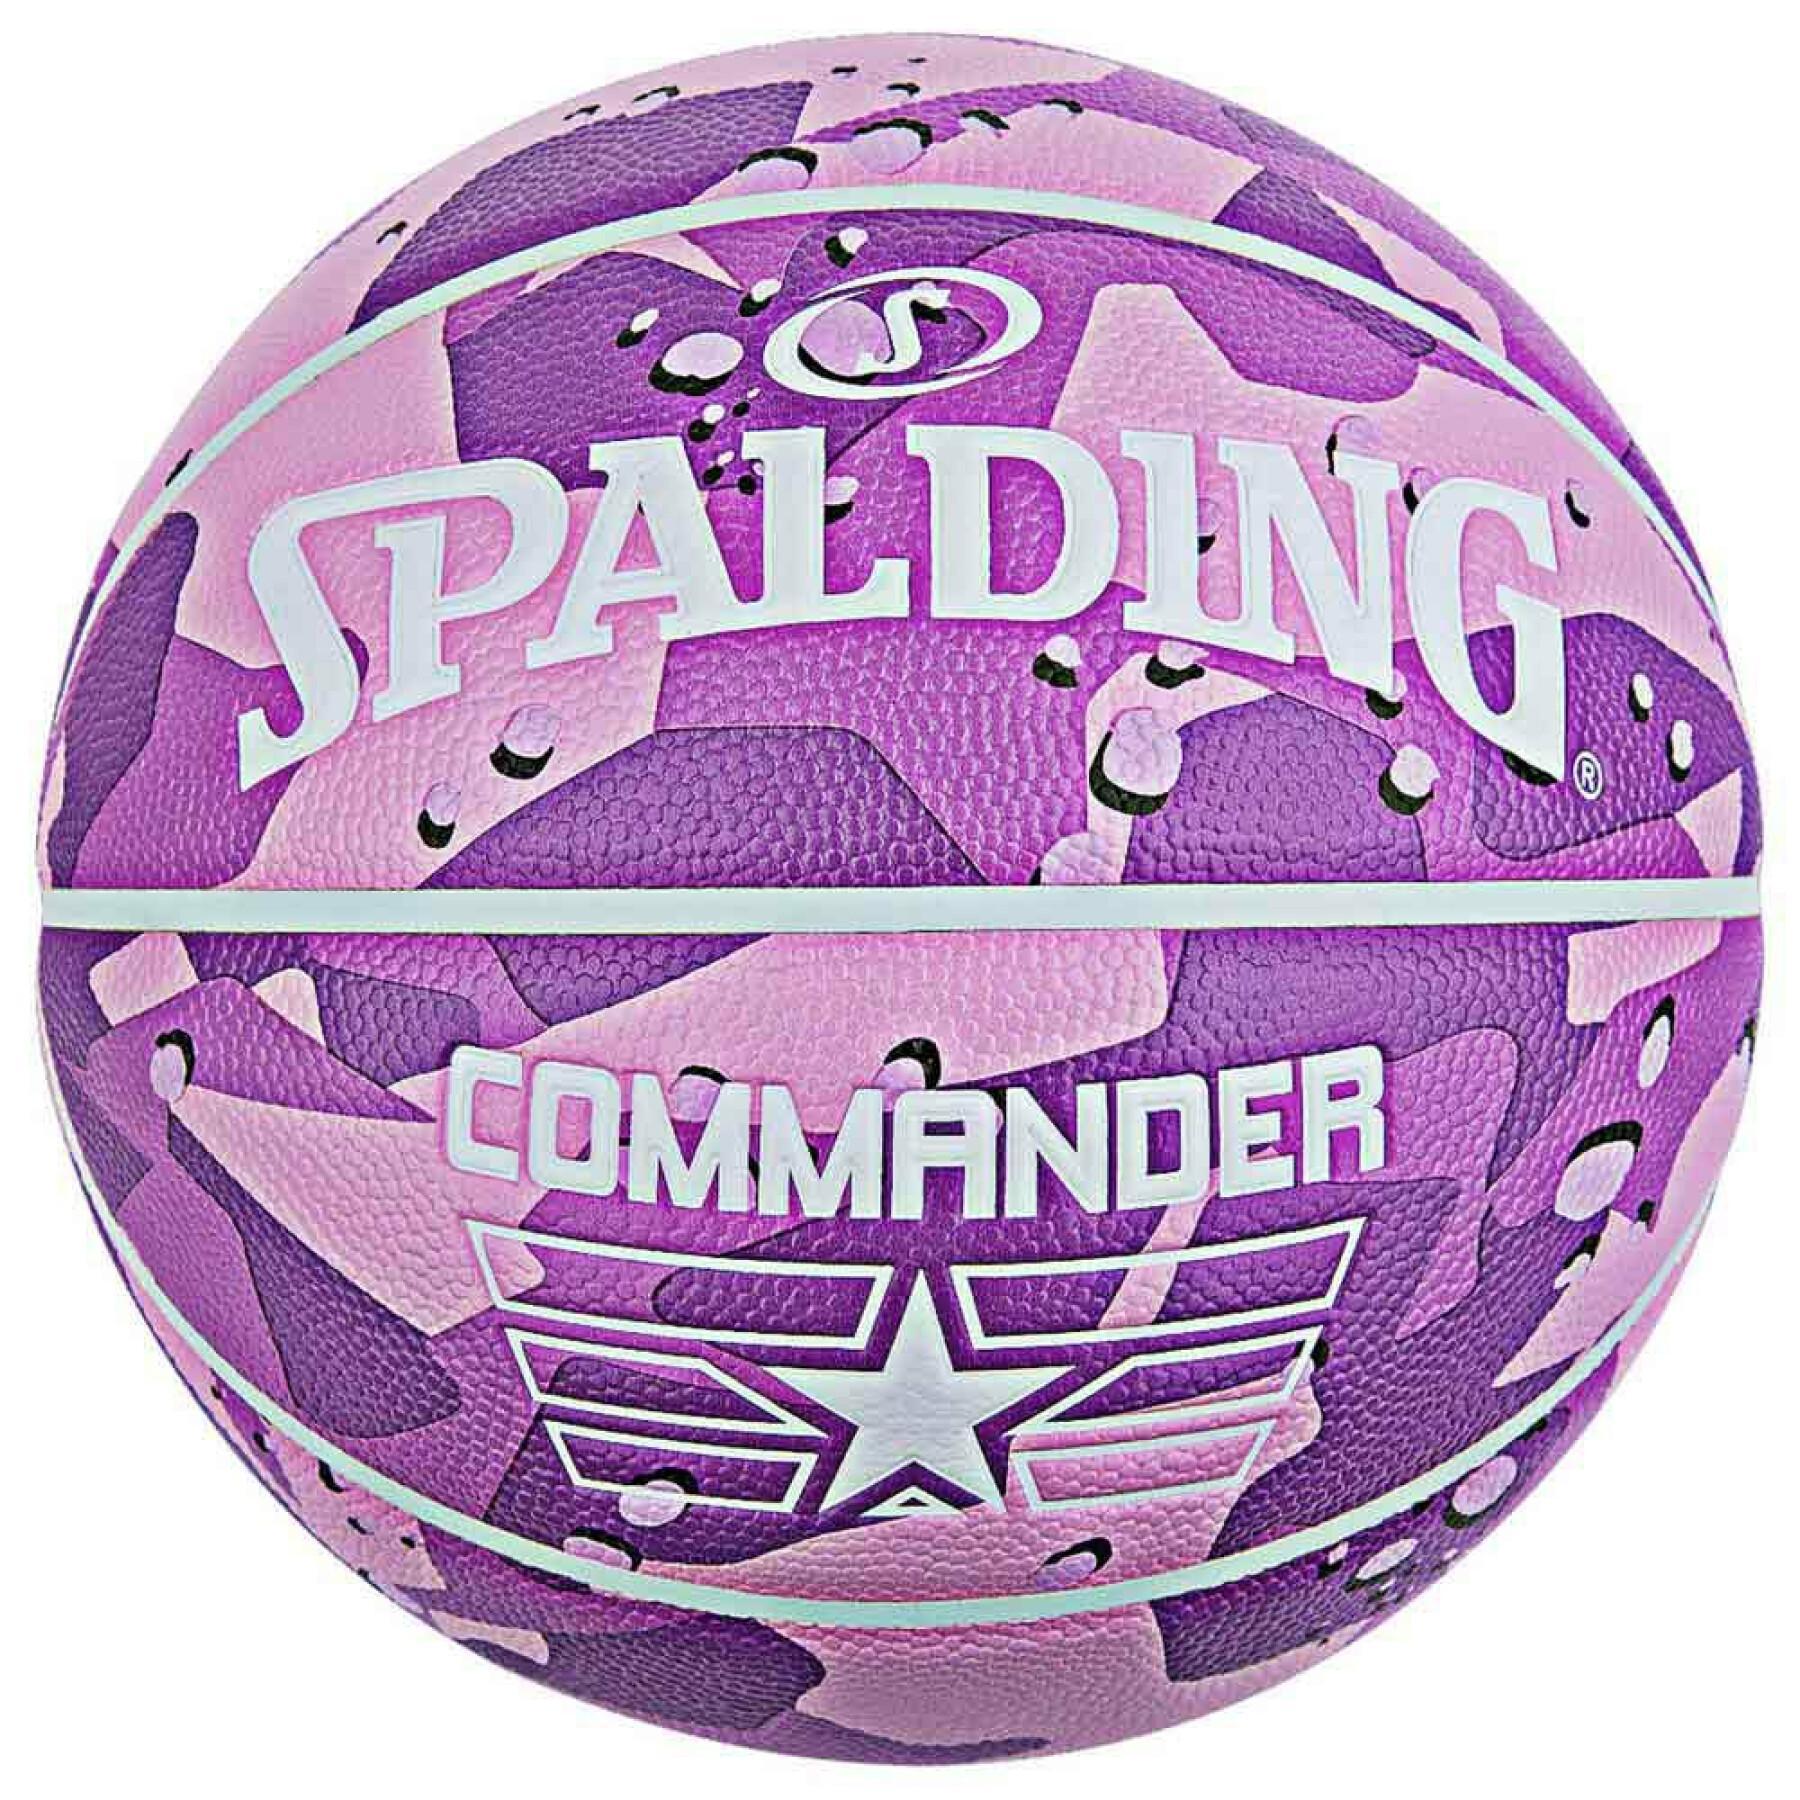 Ballong Spalding Commander